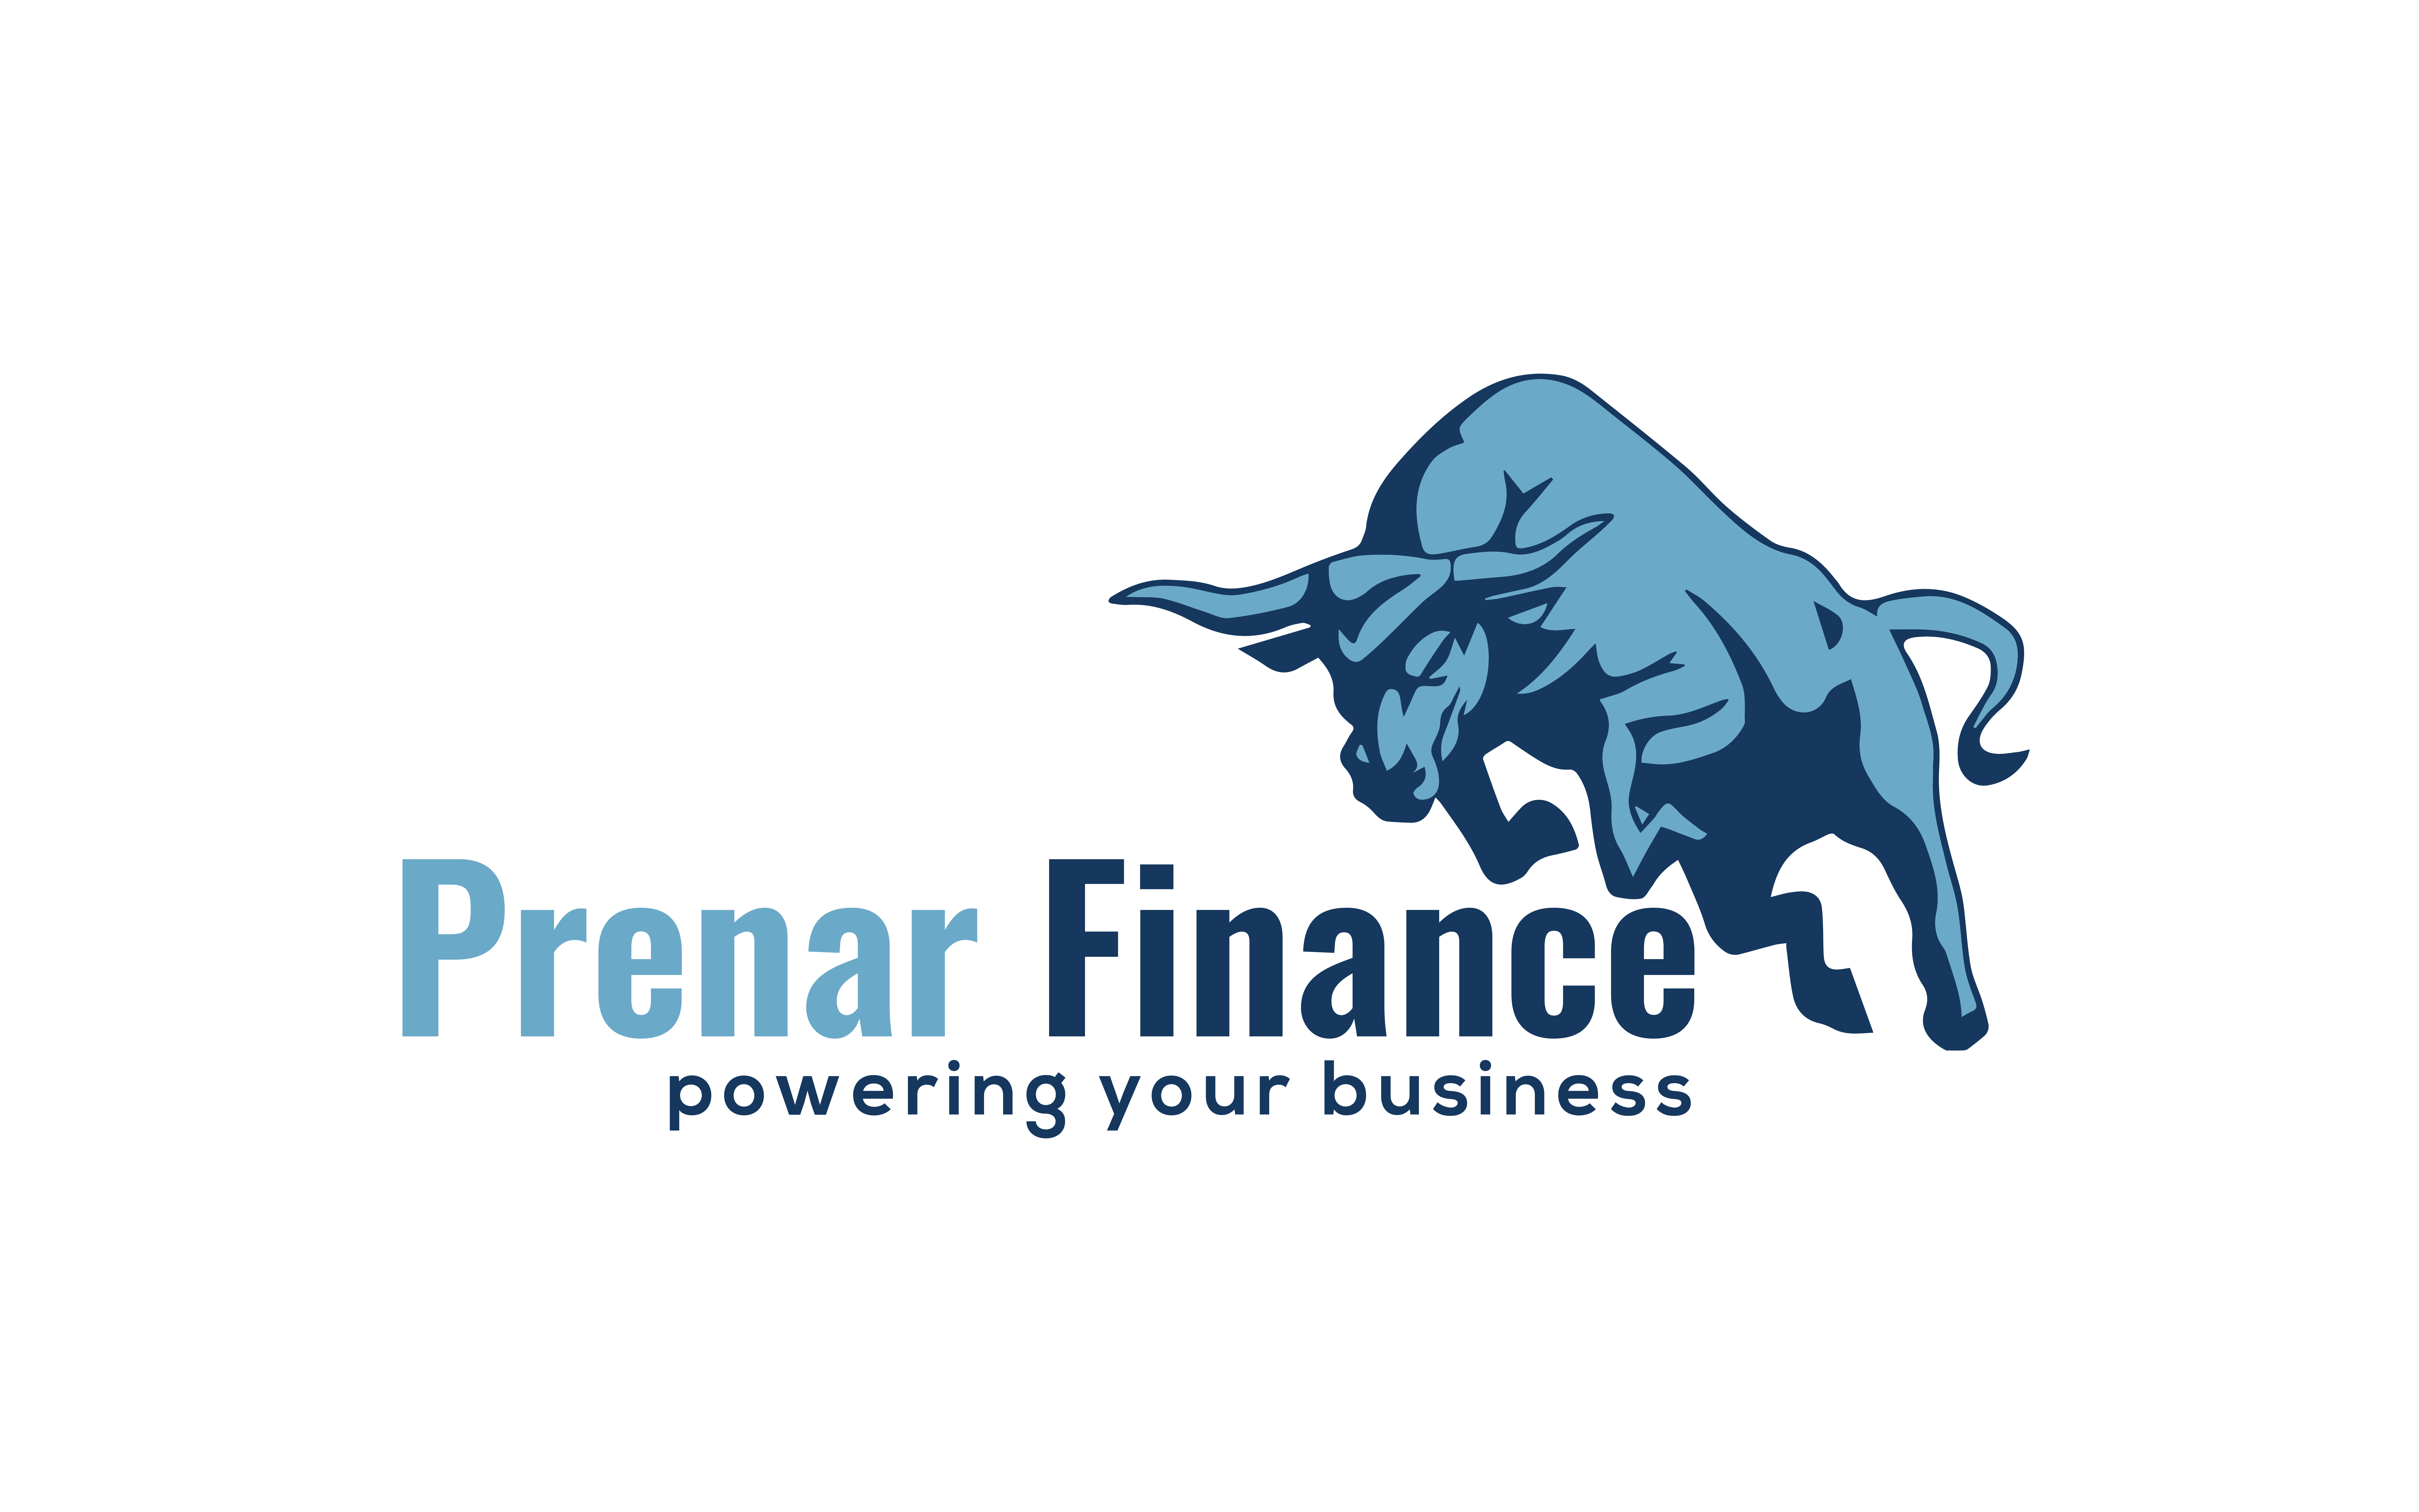 Prenar Finance